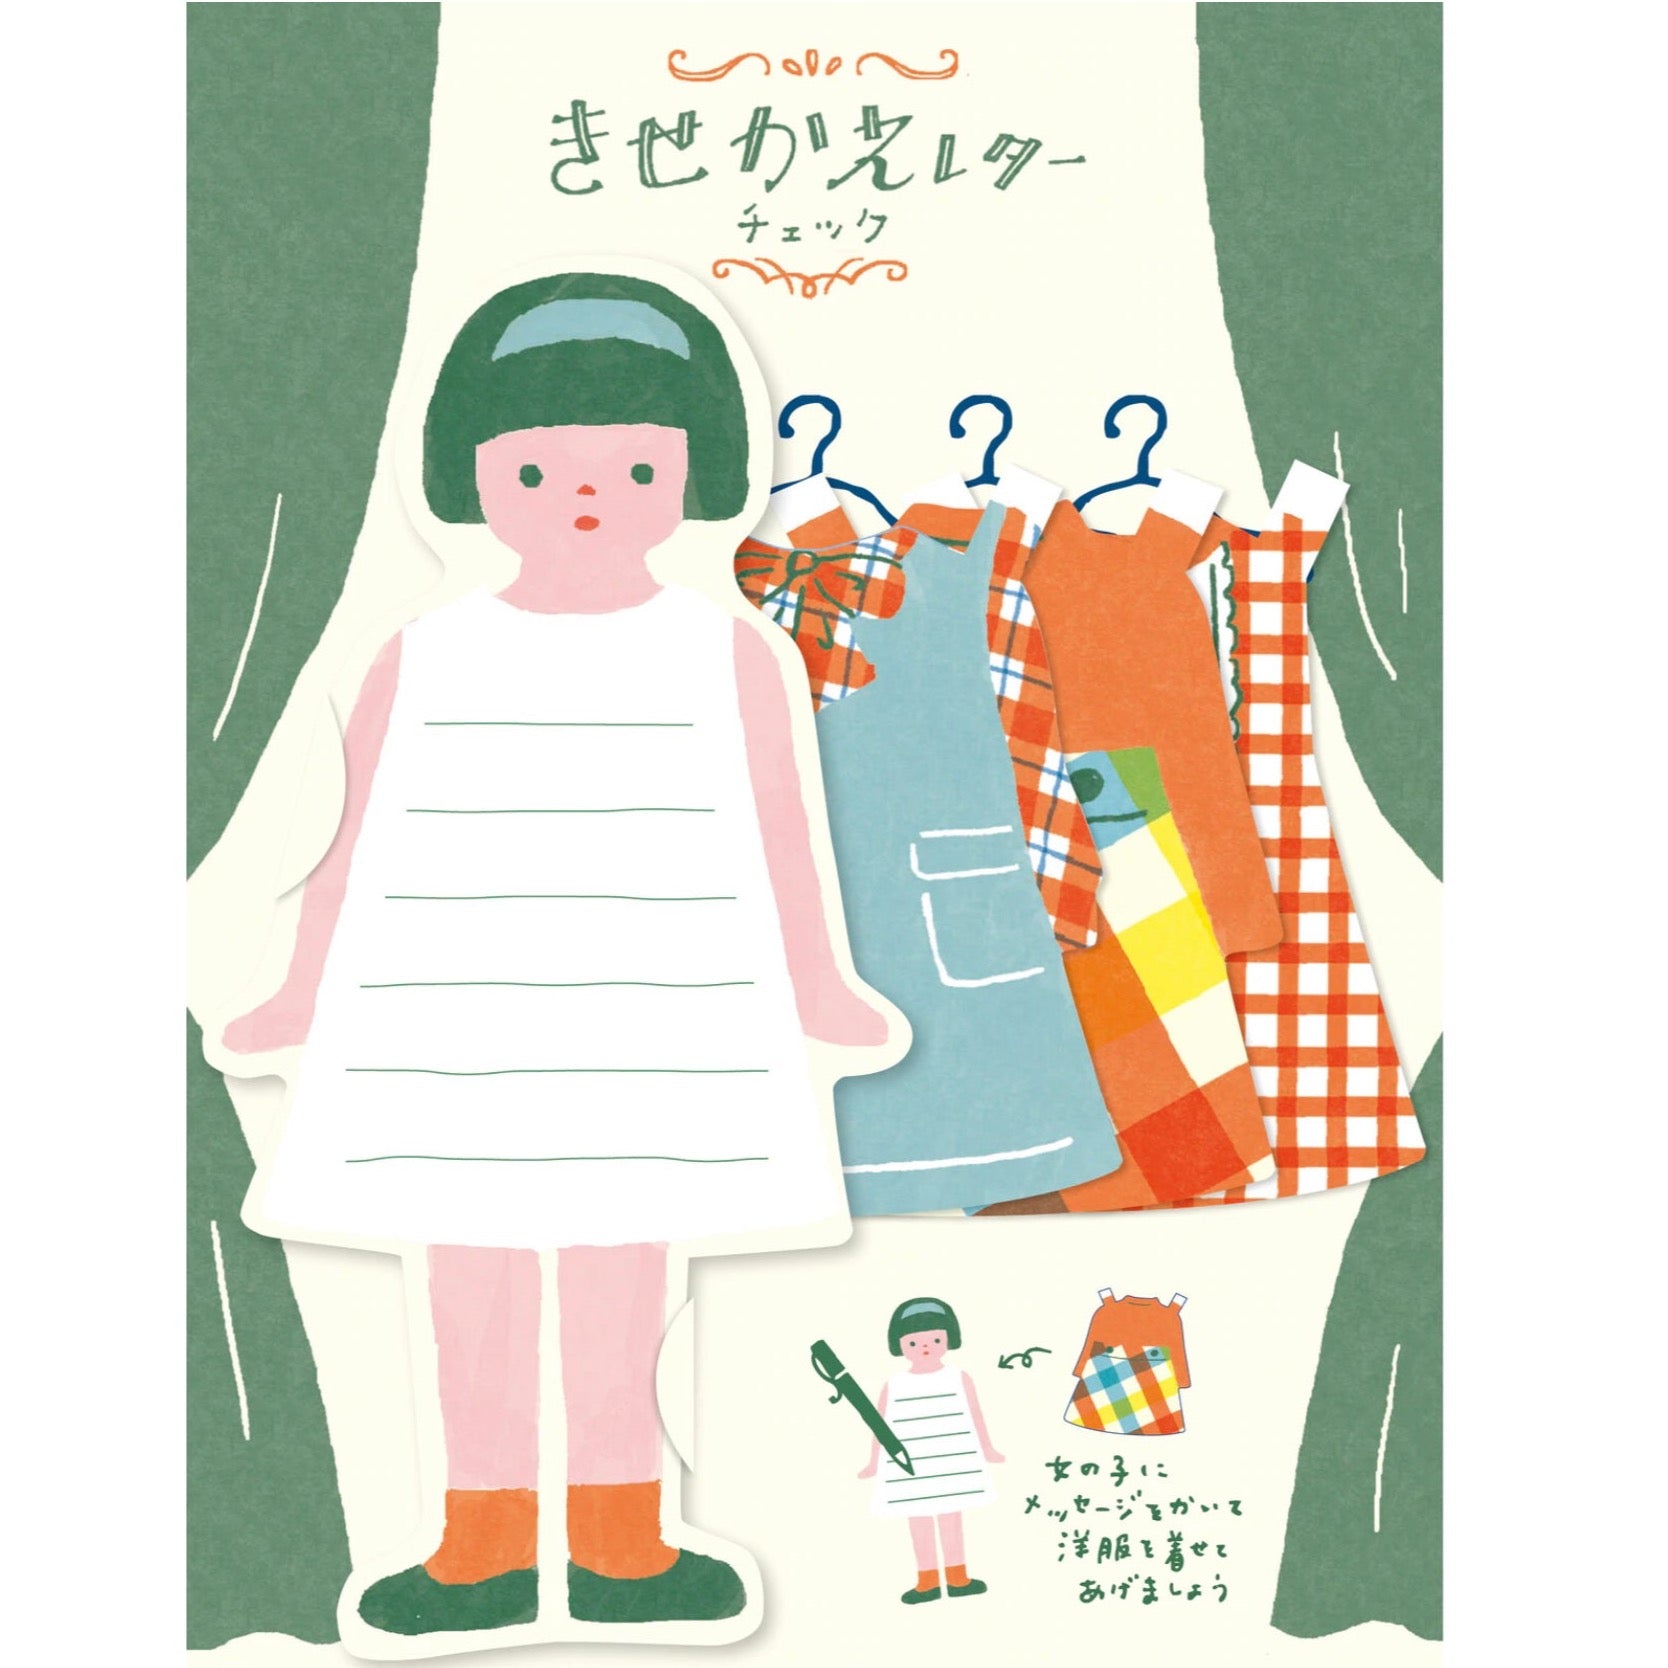 Japanese Paper Doll Stationary set - Check